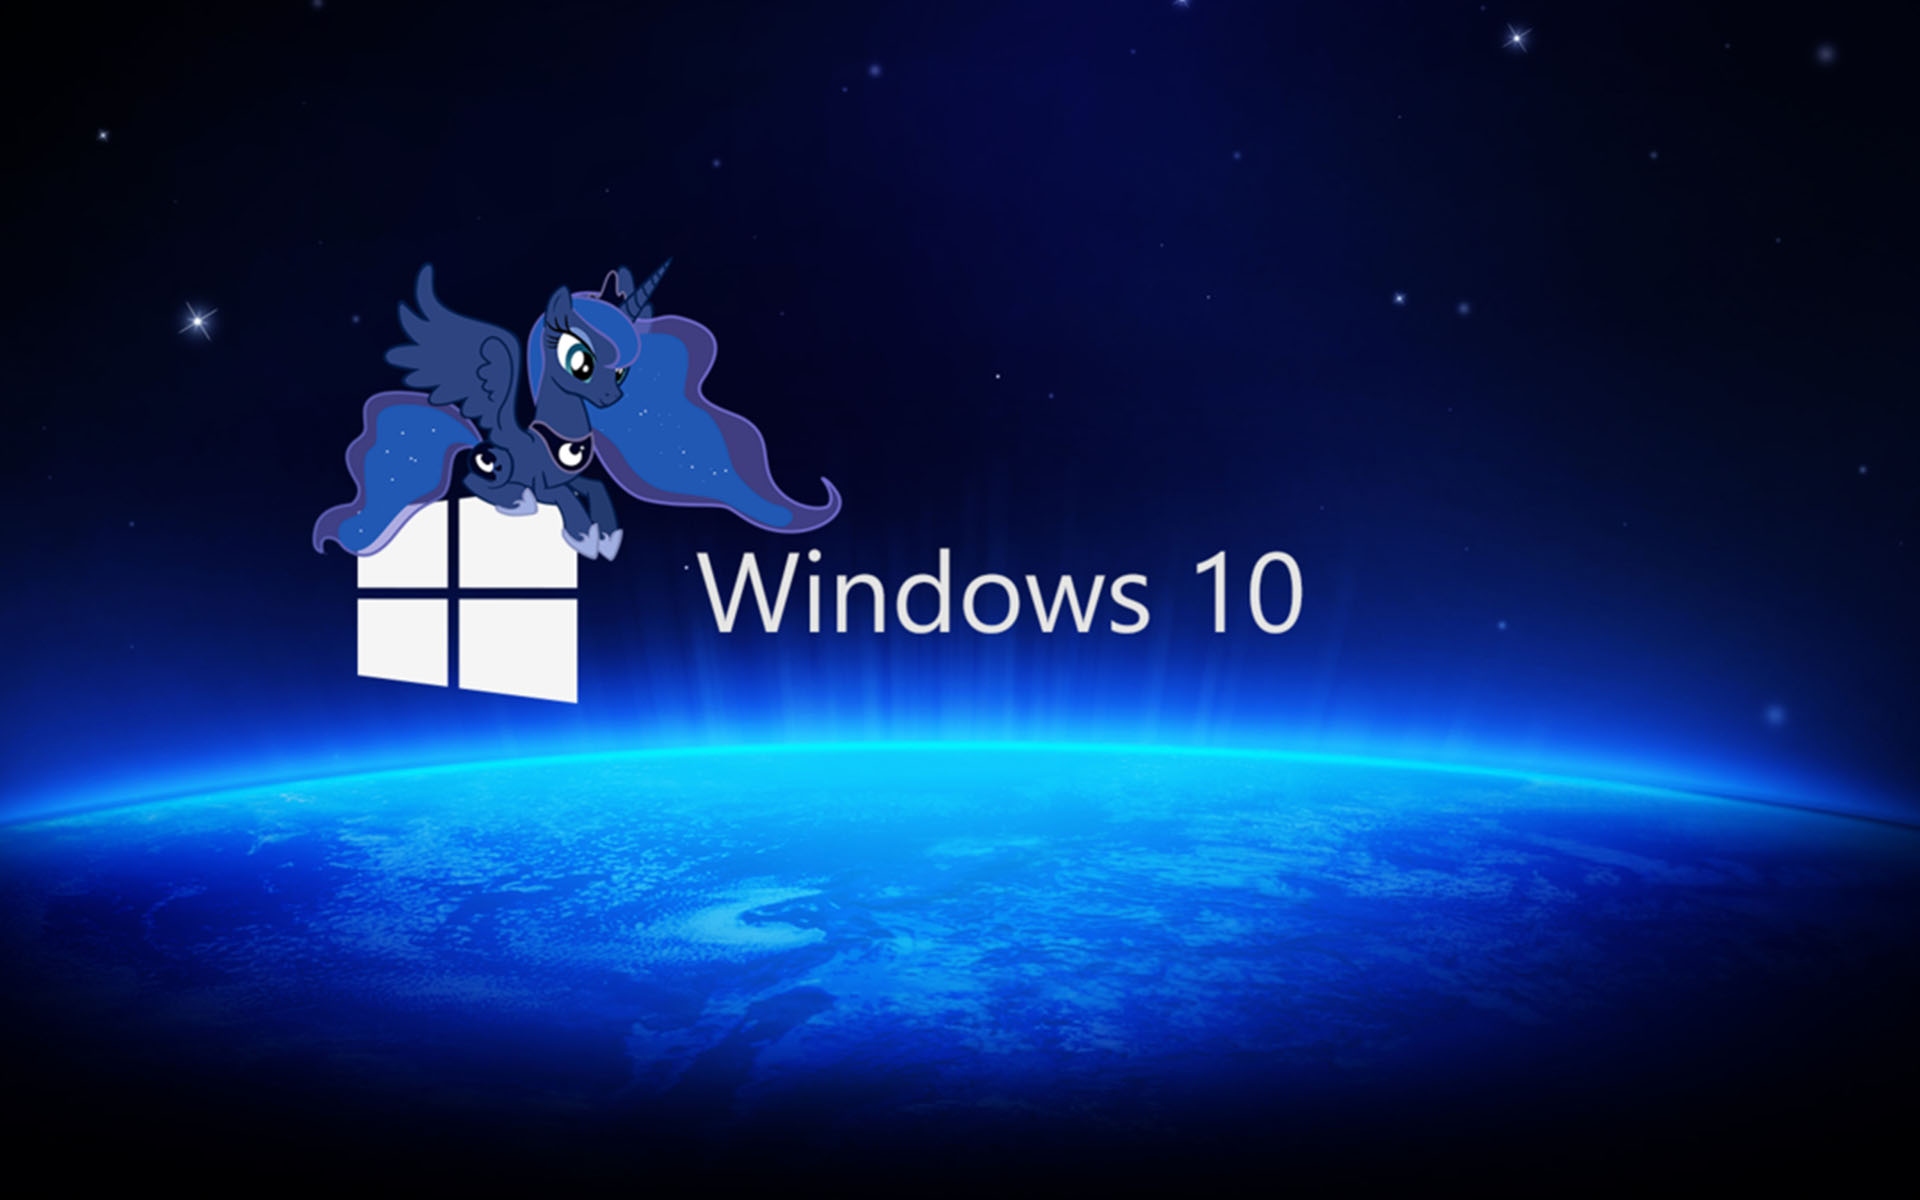 Windows 10 Official Wallpape